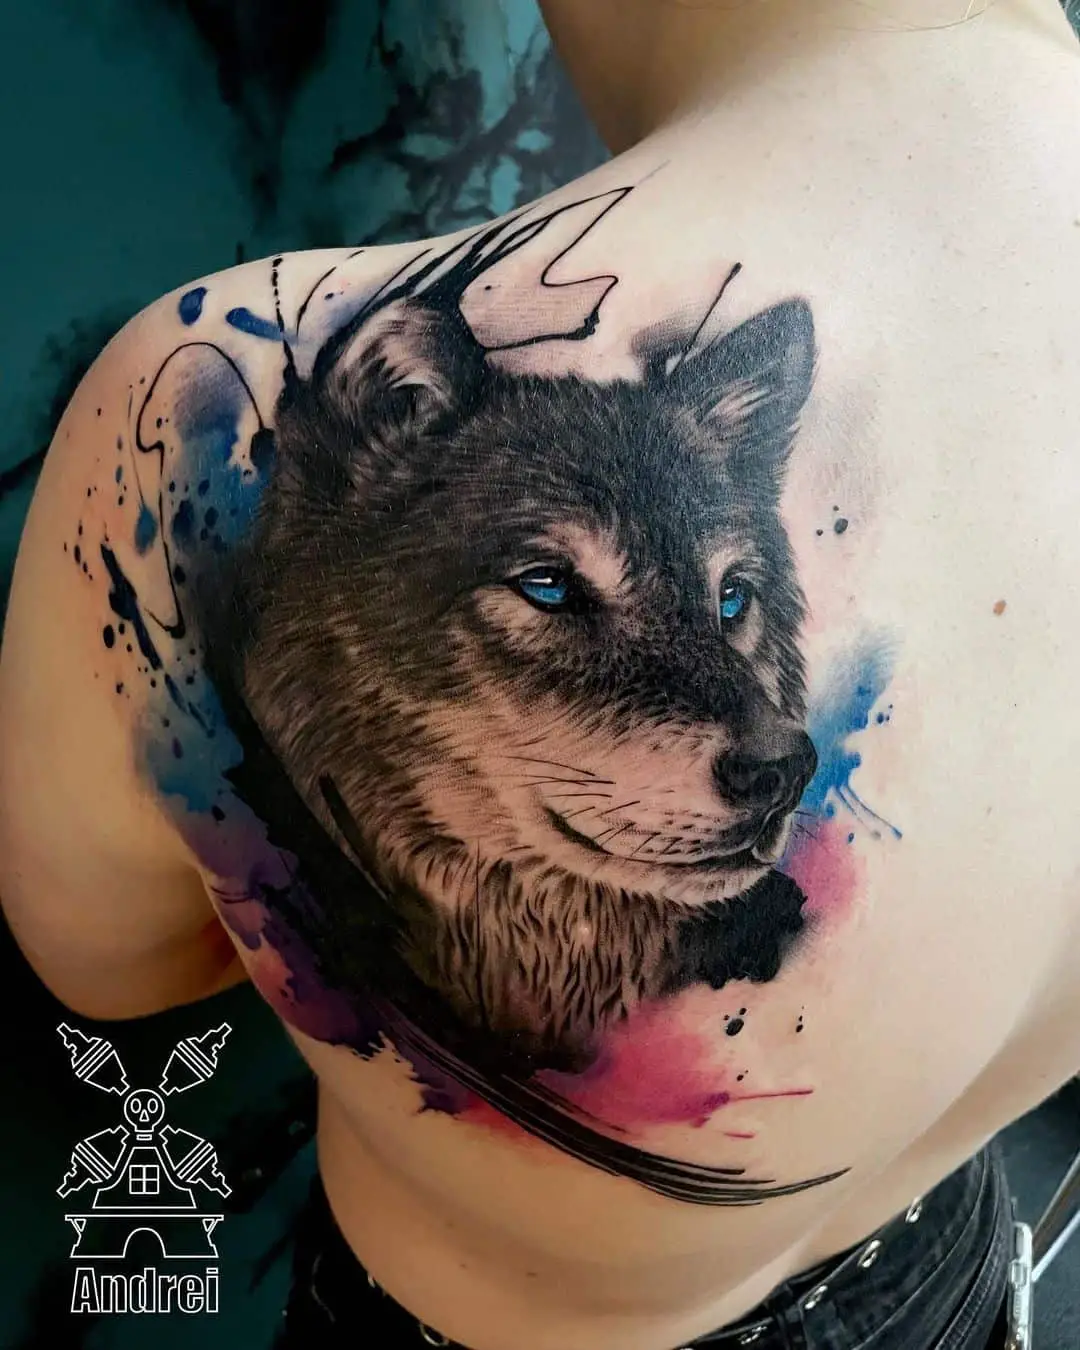 lextremiste tattoo wolf colored tattoo